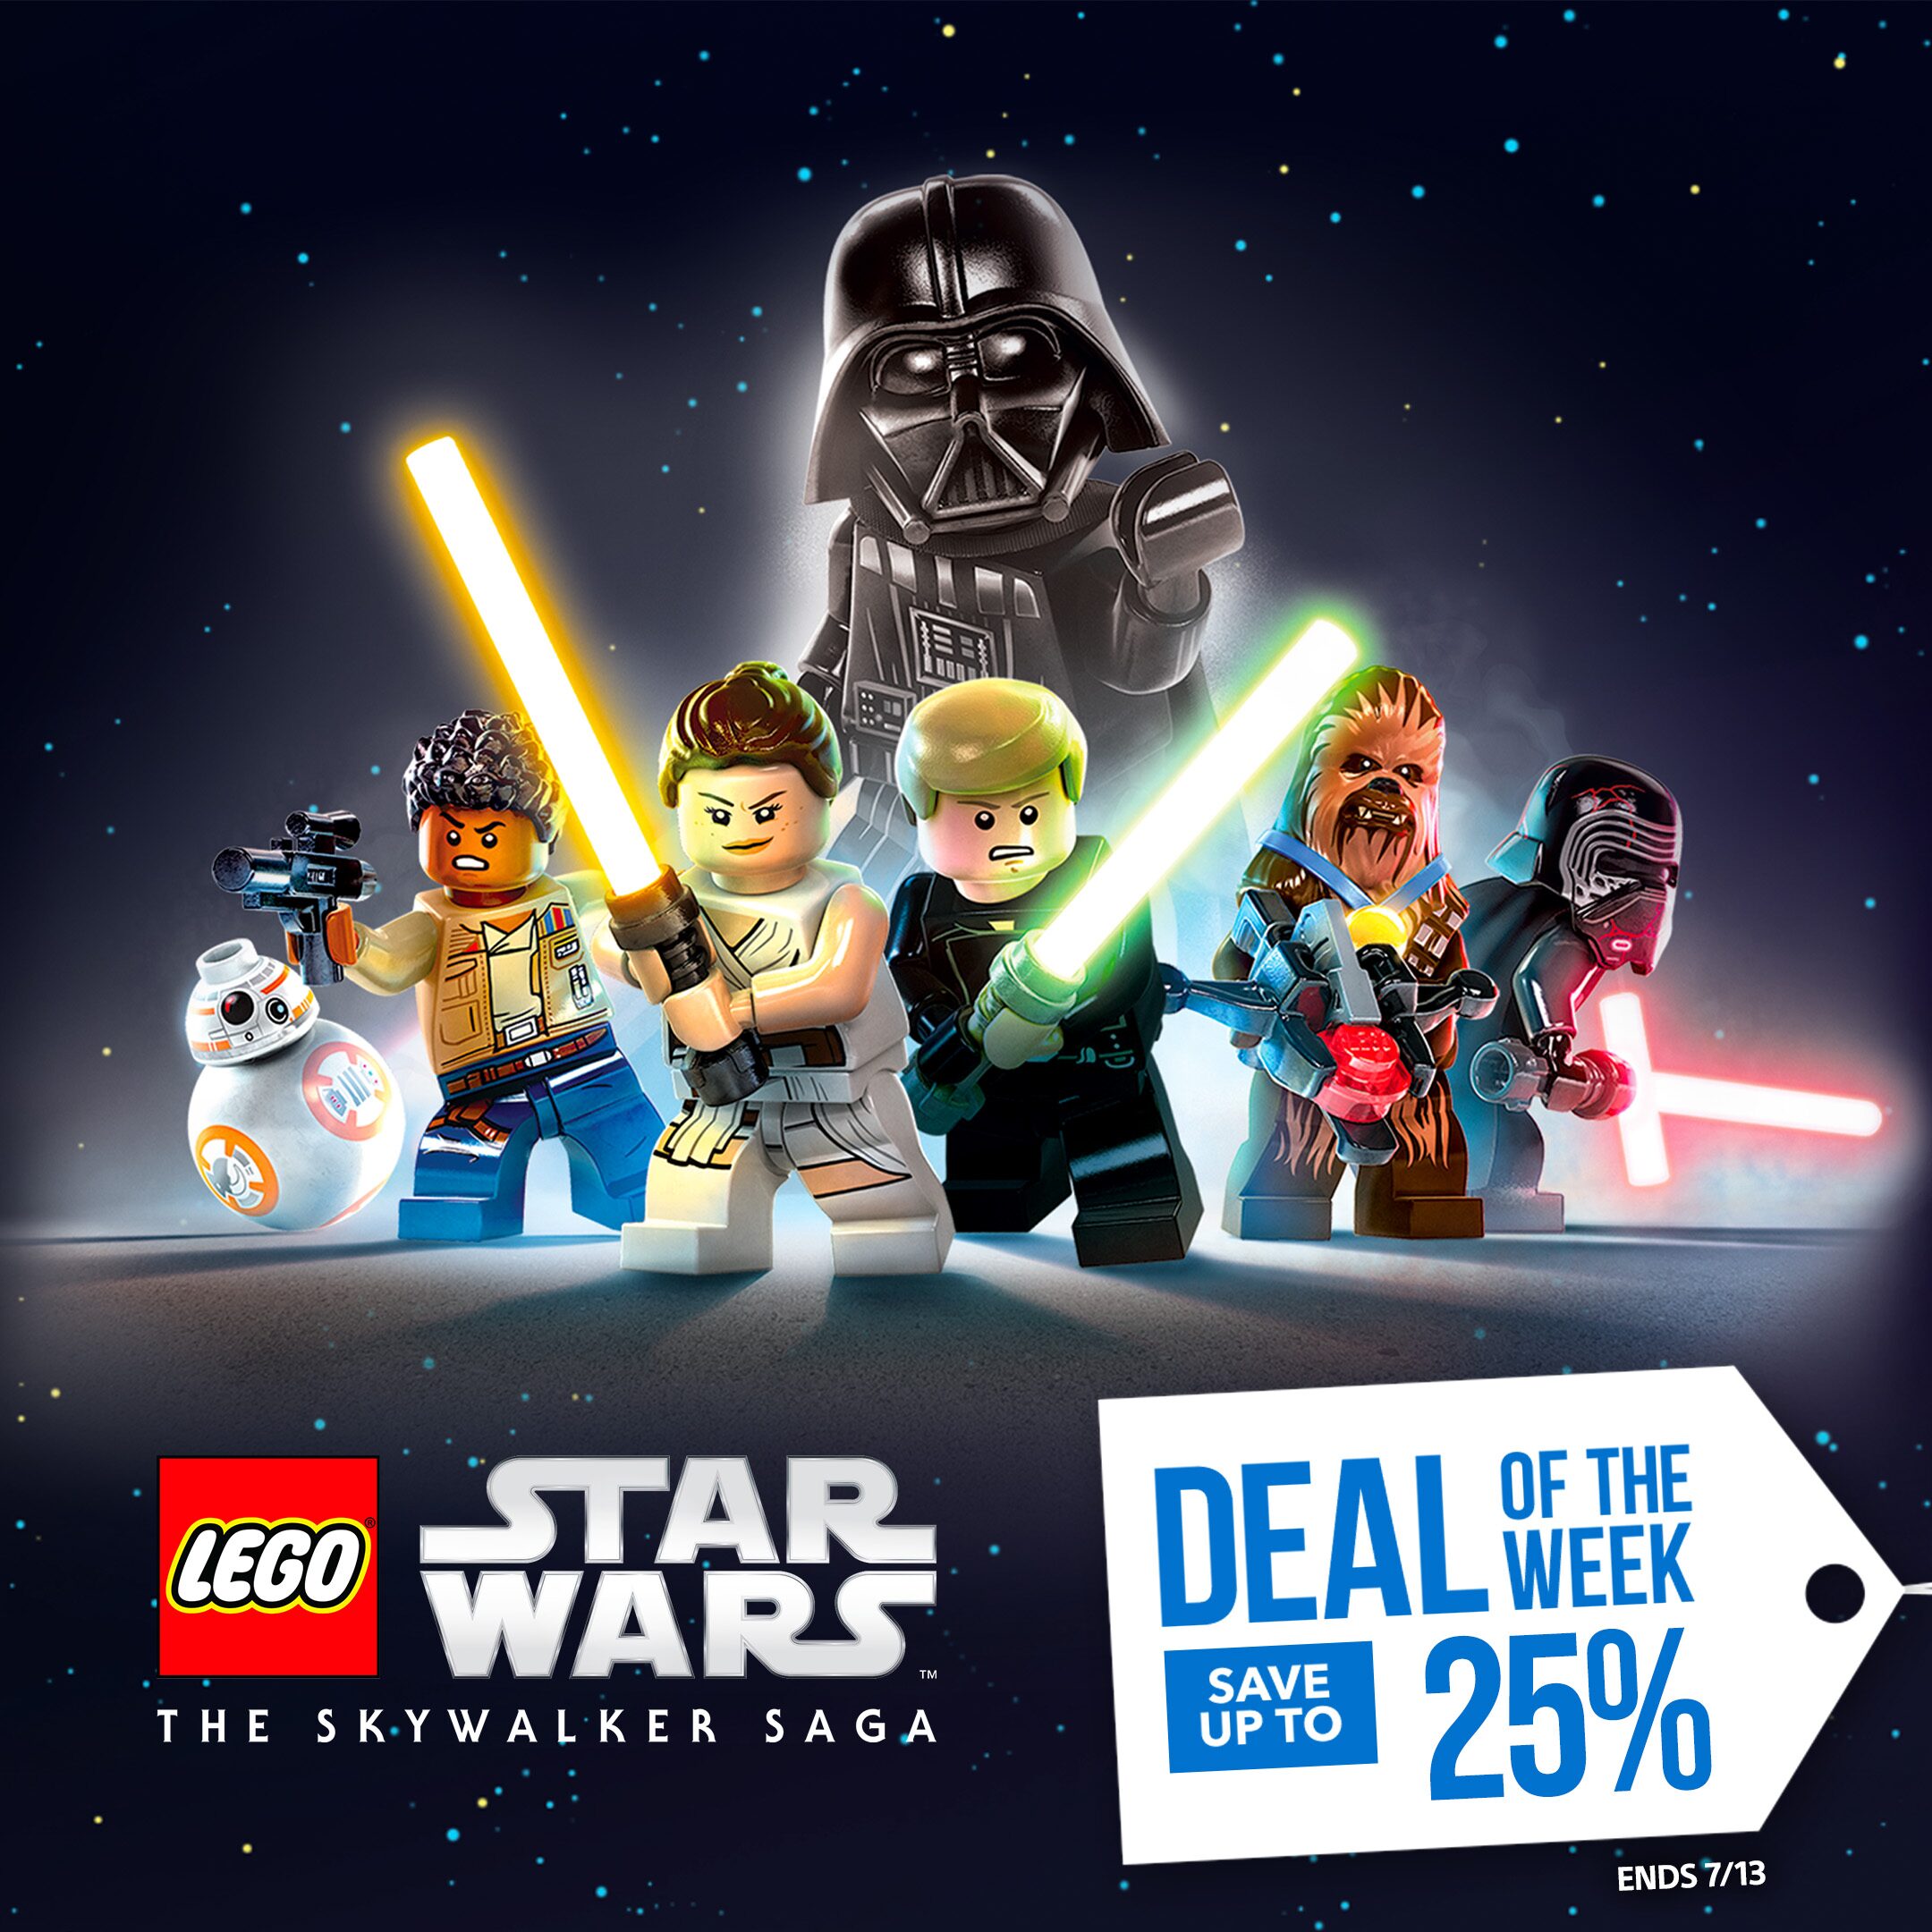 [PROMO] Deal of the Week - LEGO Star Wars Skywalker Saga